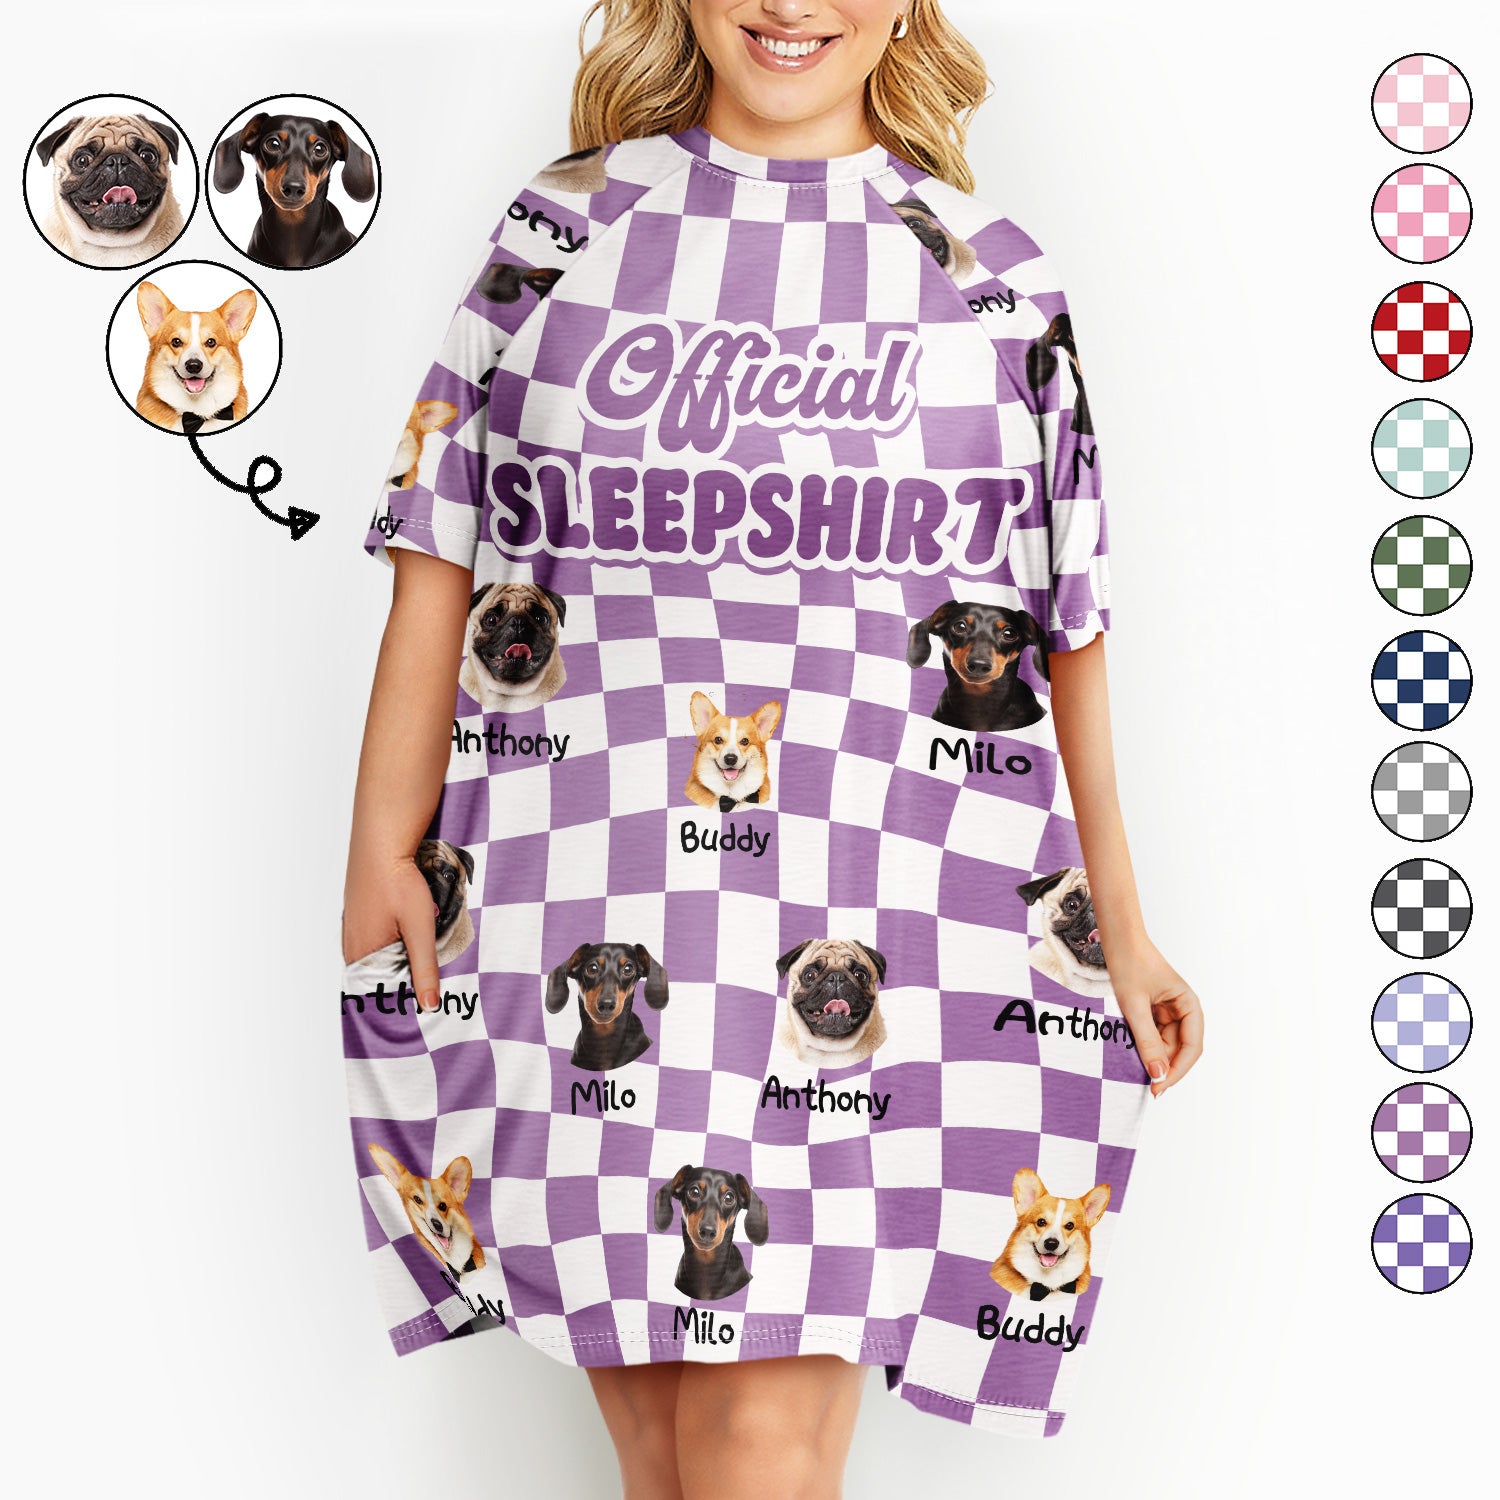 Custom Photo Official Sleepshirt - Birthday, Loving Gift For Dog Lover, Cat Mum, Pet Mom - Personalized Women's Sleep Tee